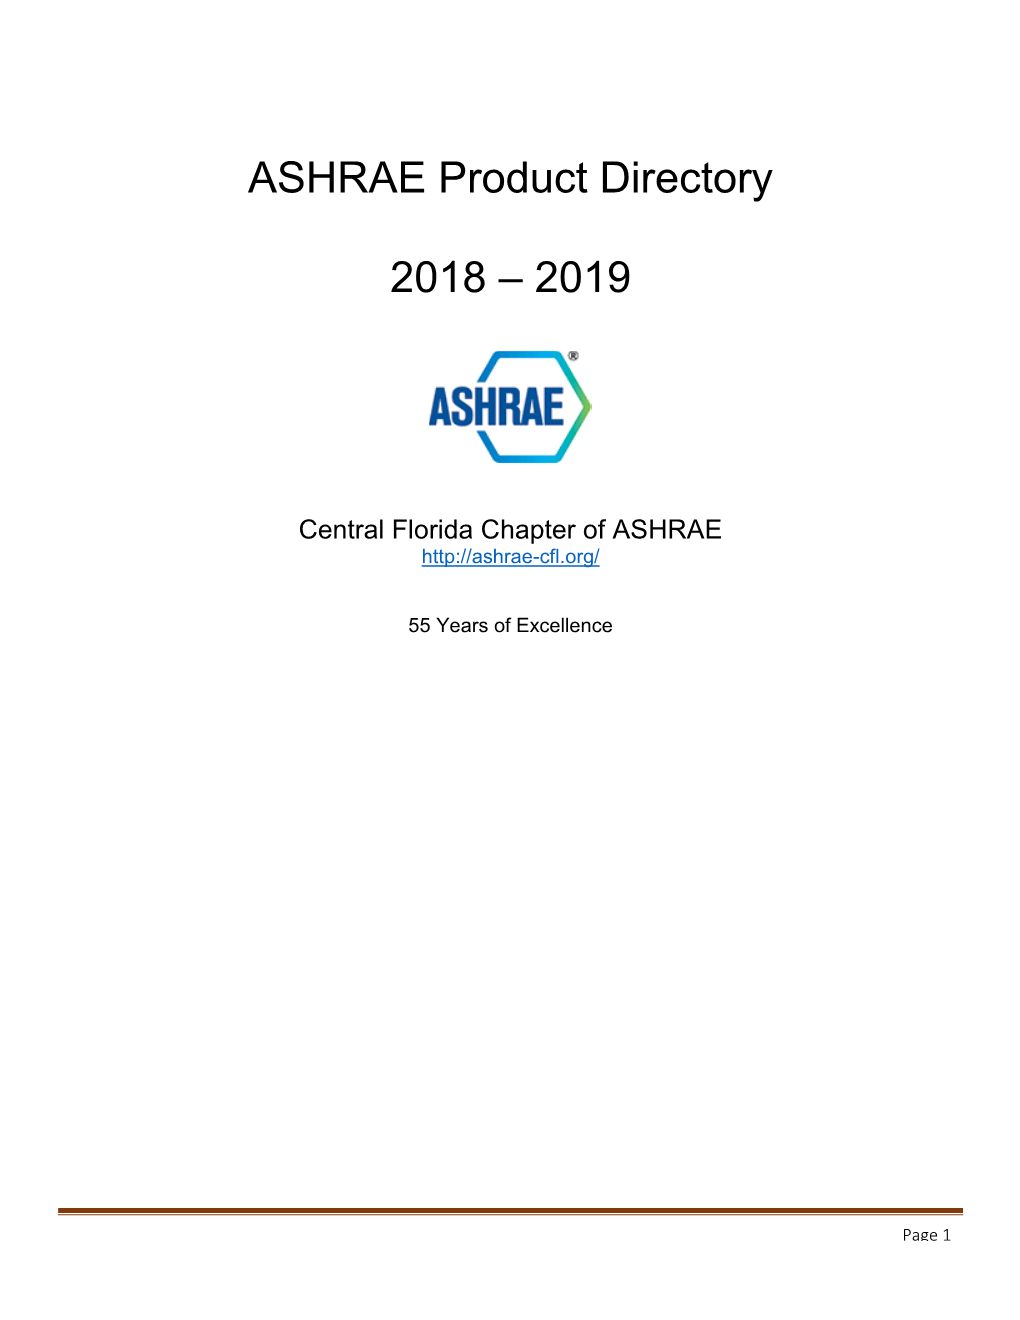 ASHRAE Product Directory 2018